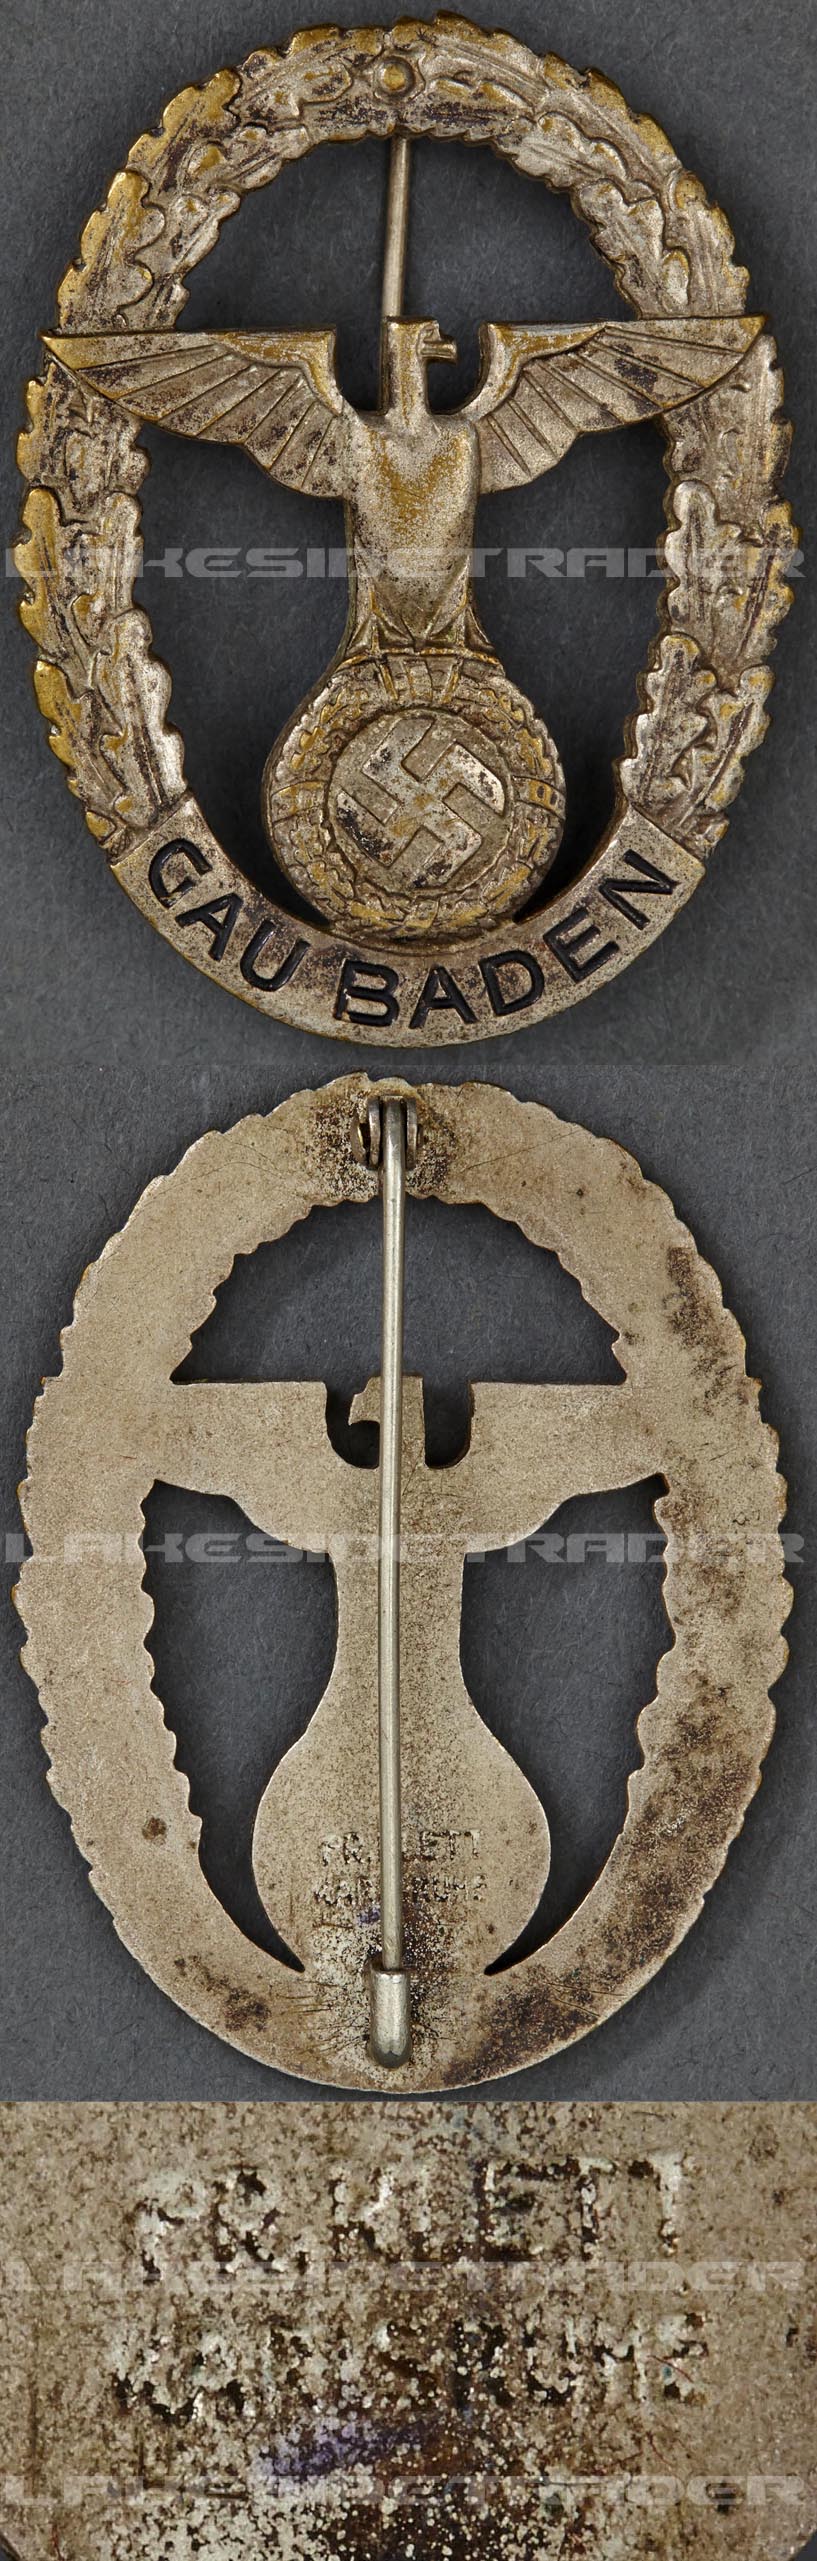 GAU Honor Badge Baden Large Version